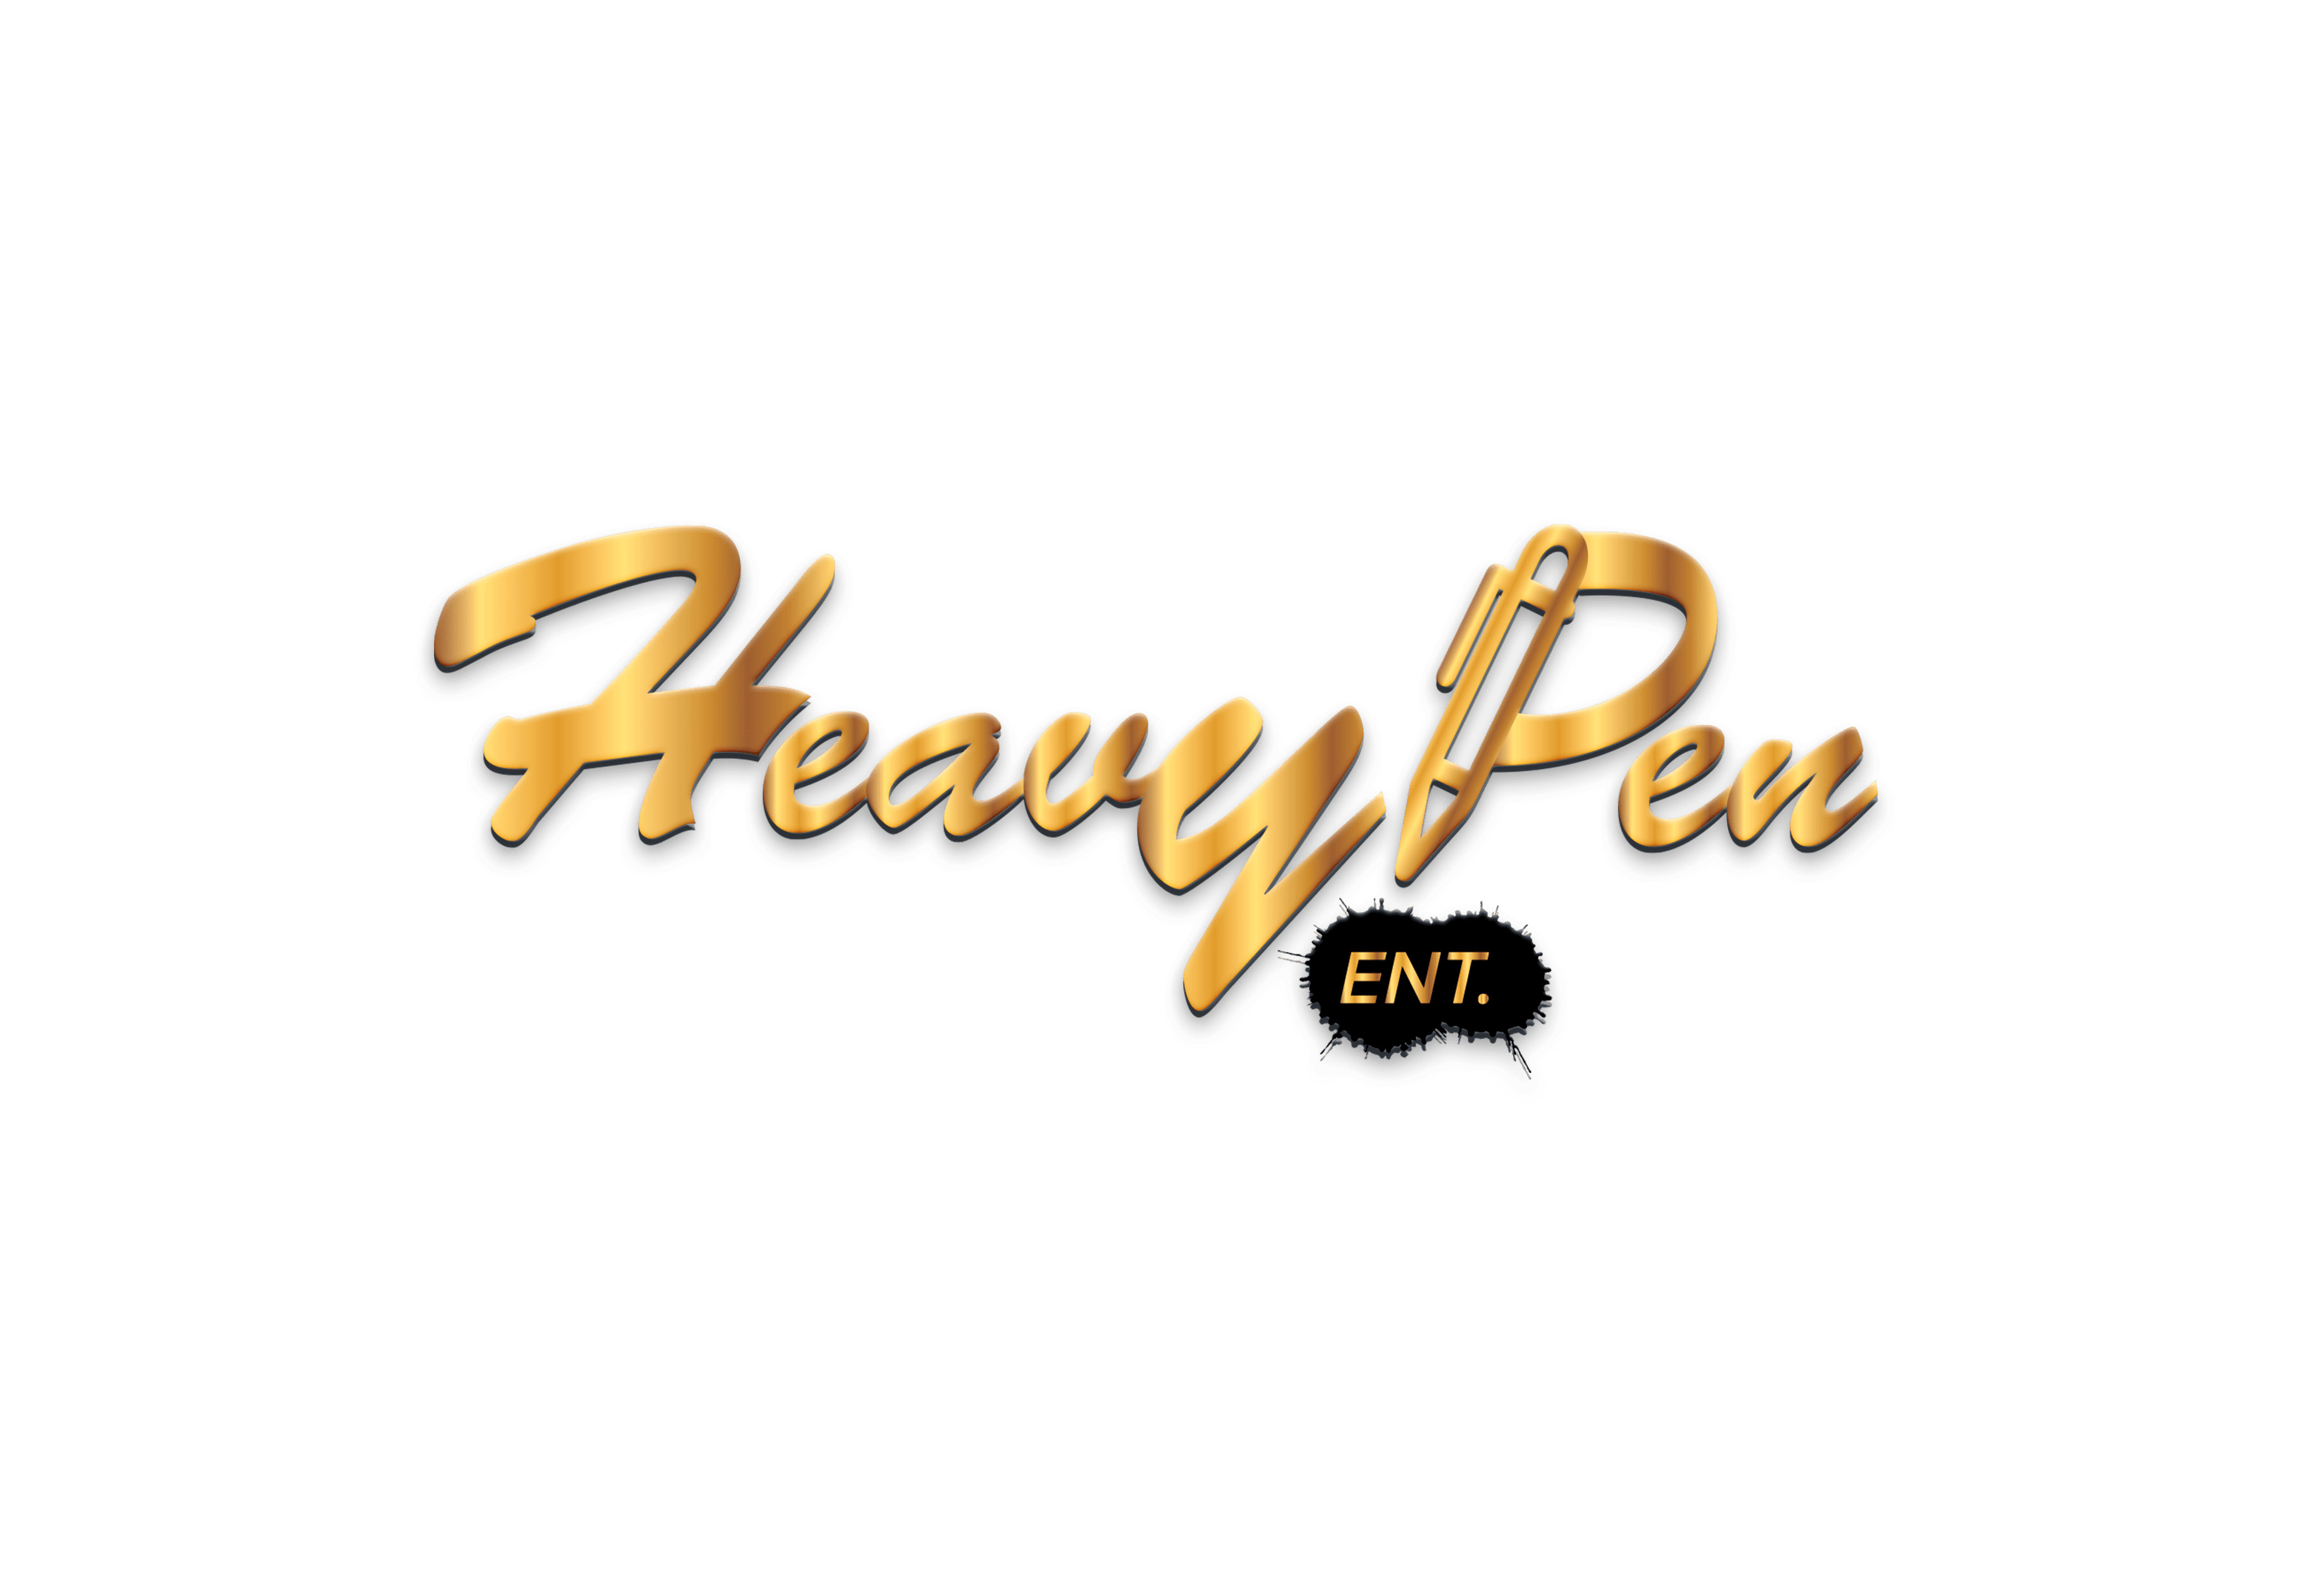 Heavy Pen Entertainment